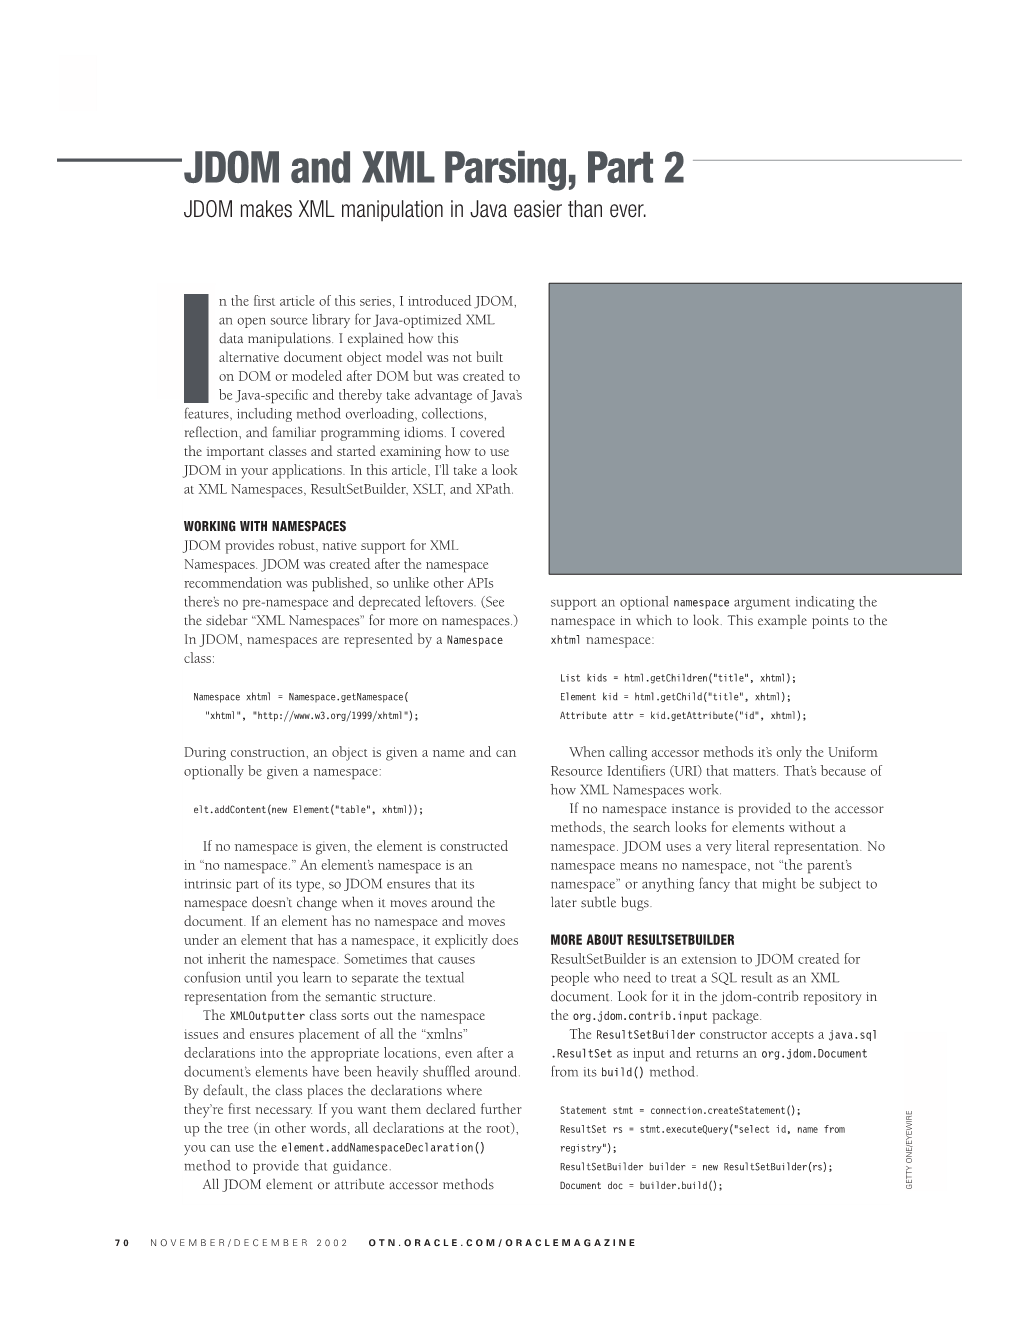 JDOM and XML Parsing, Part 2 JDOM Makes XML Manipulation in Java Easier Than Ever